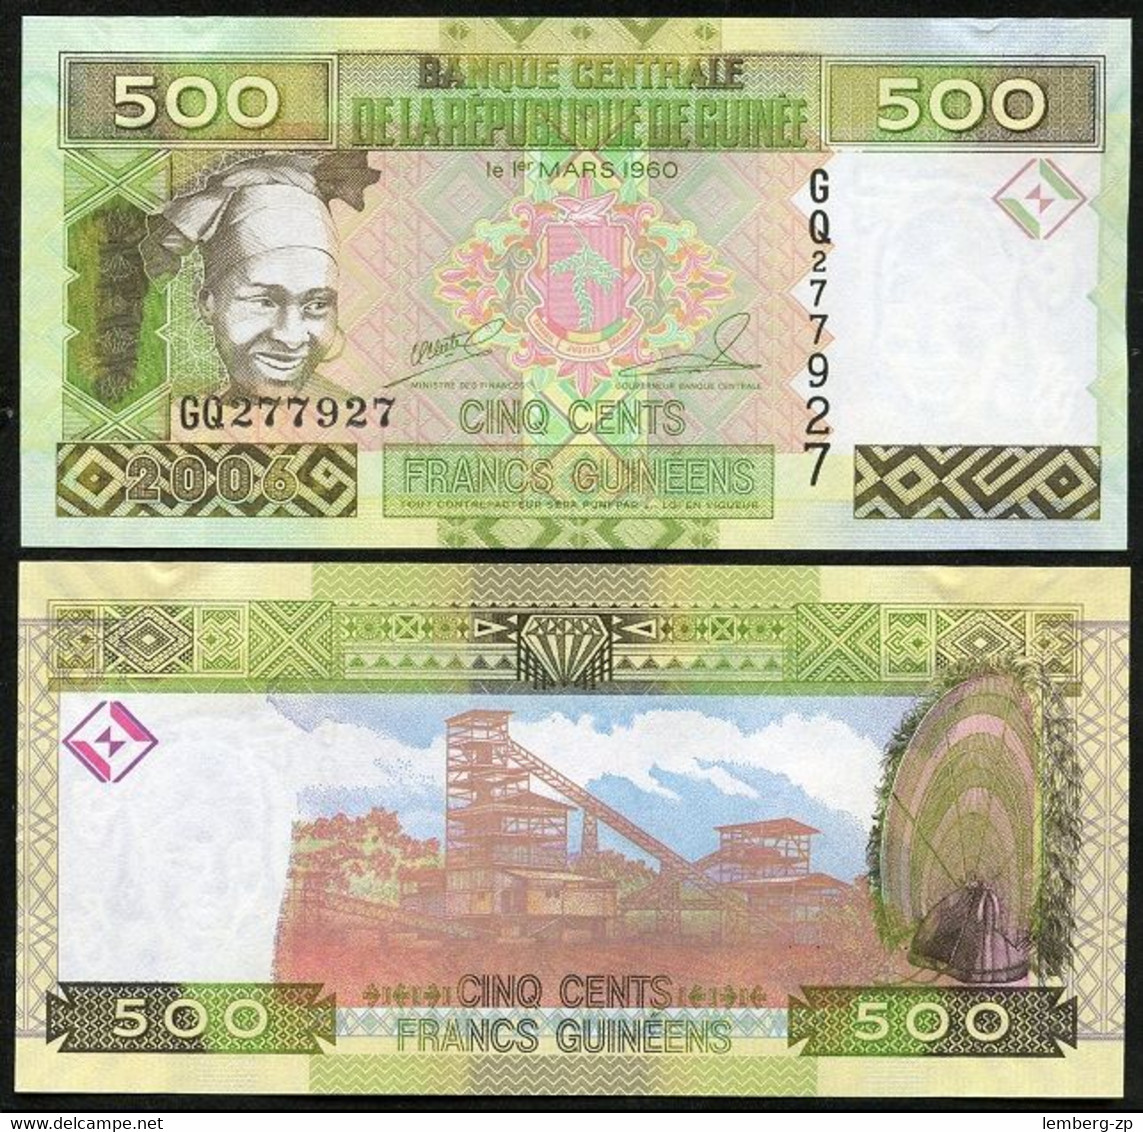 Guinea - 500 Francs 2006 UNC P. 39a Lemberg-Zp - Guinea